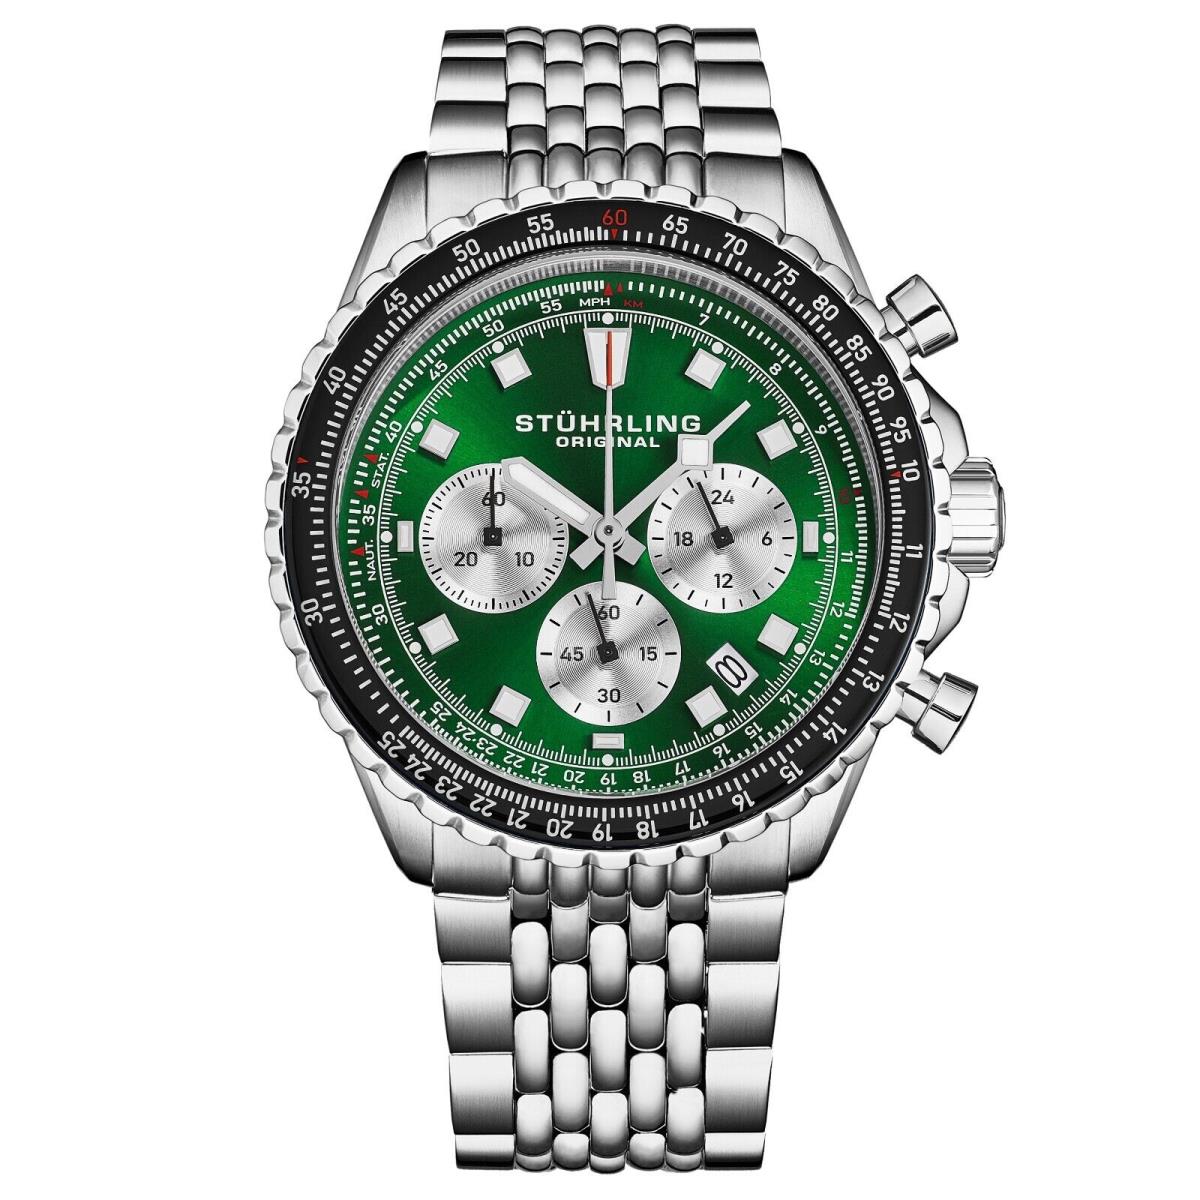 Stuhrling Japanese Chronograph Raceway 1010 44mm Stainless Steel Quartz Watch - Dial: Green, Band: Silver, Bezel: Black